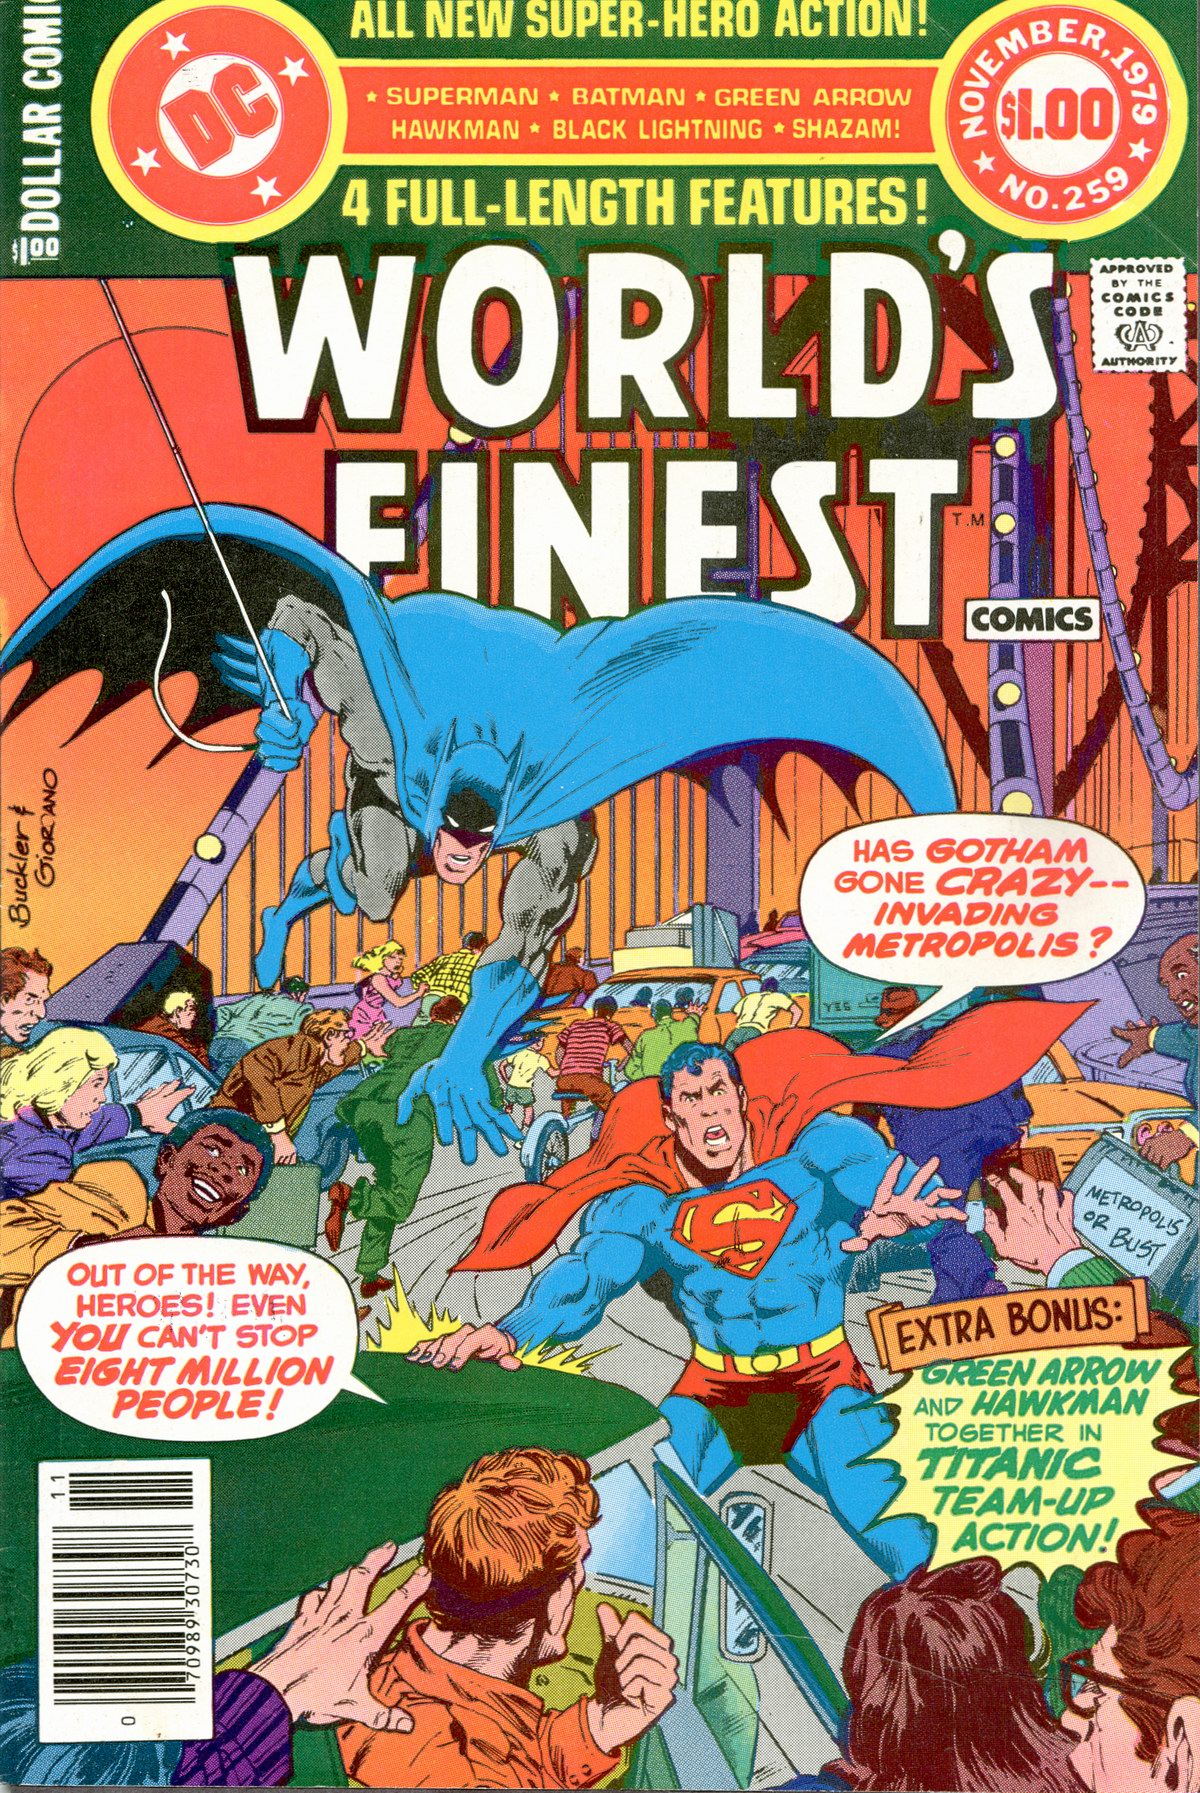 Read online World's Finest Comics comic -  Issue #259 - 1